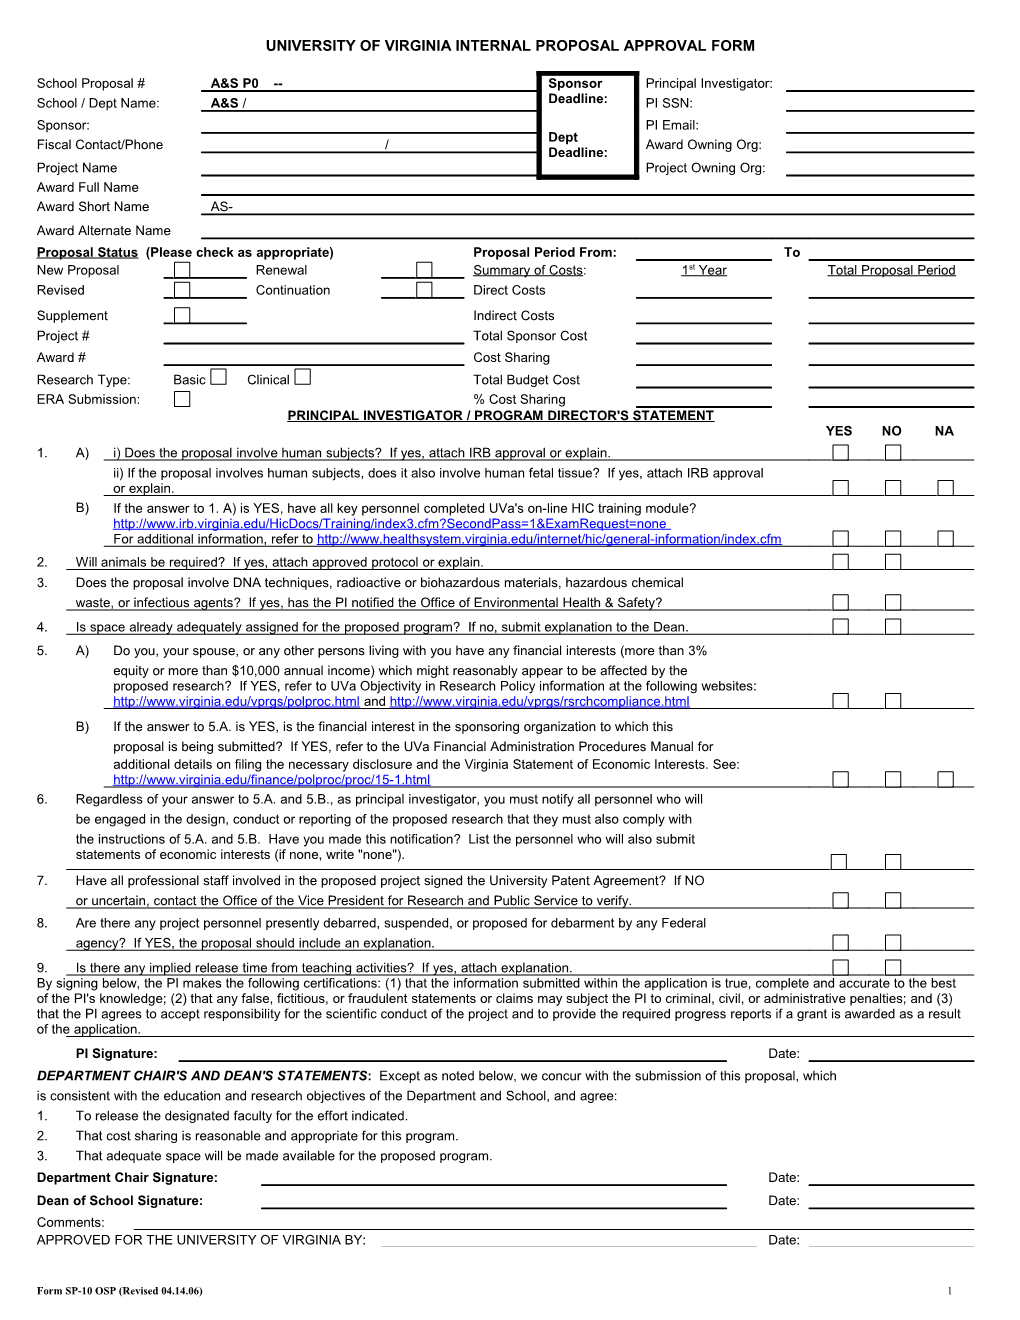 University of Virginia Internal Proposal Approval Form